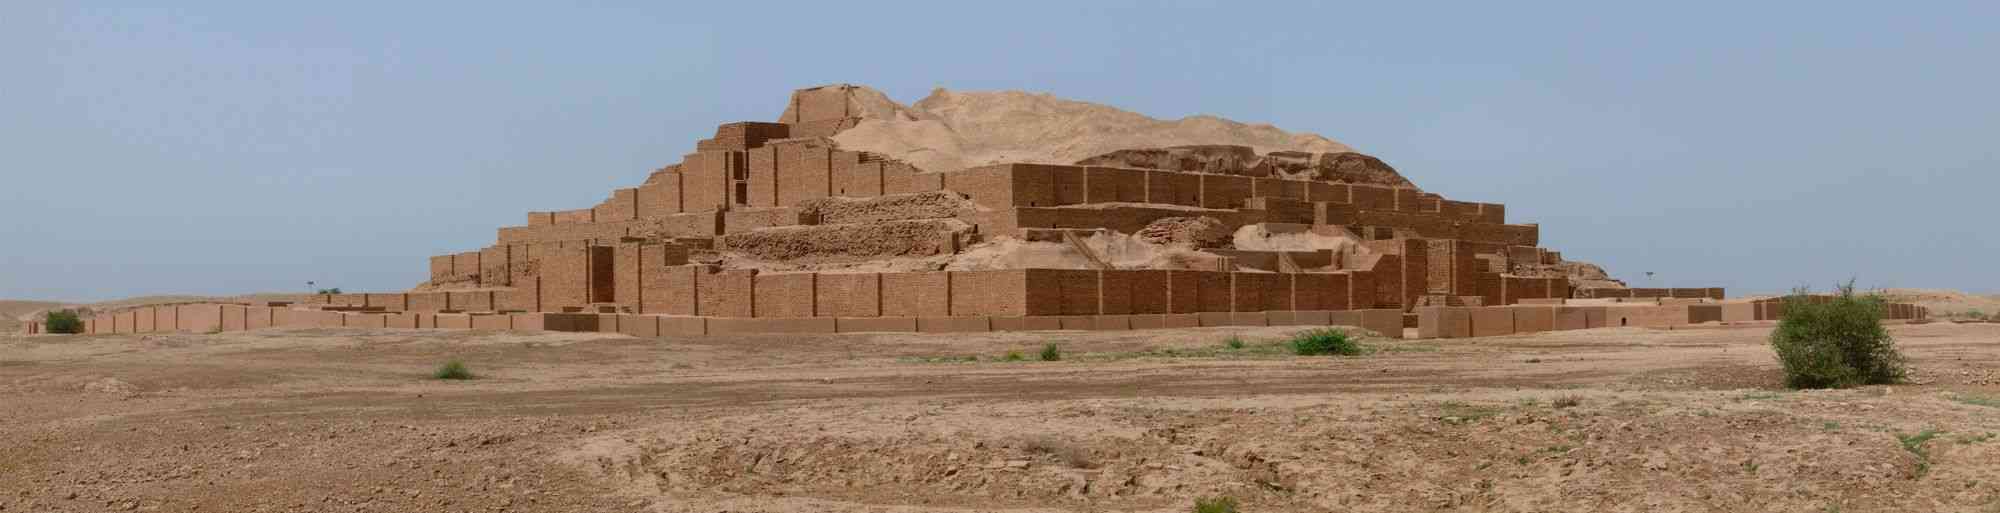 Chogha zanbil ziggurat - Iran